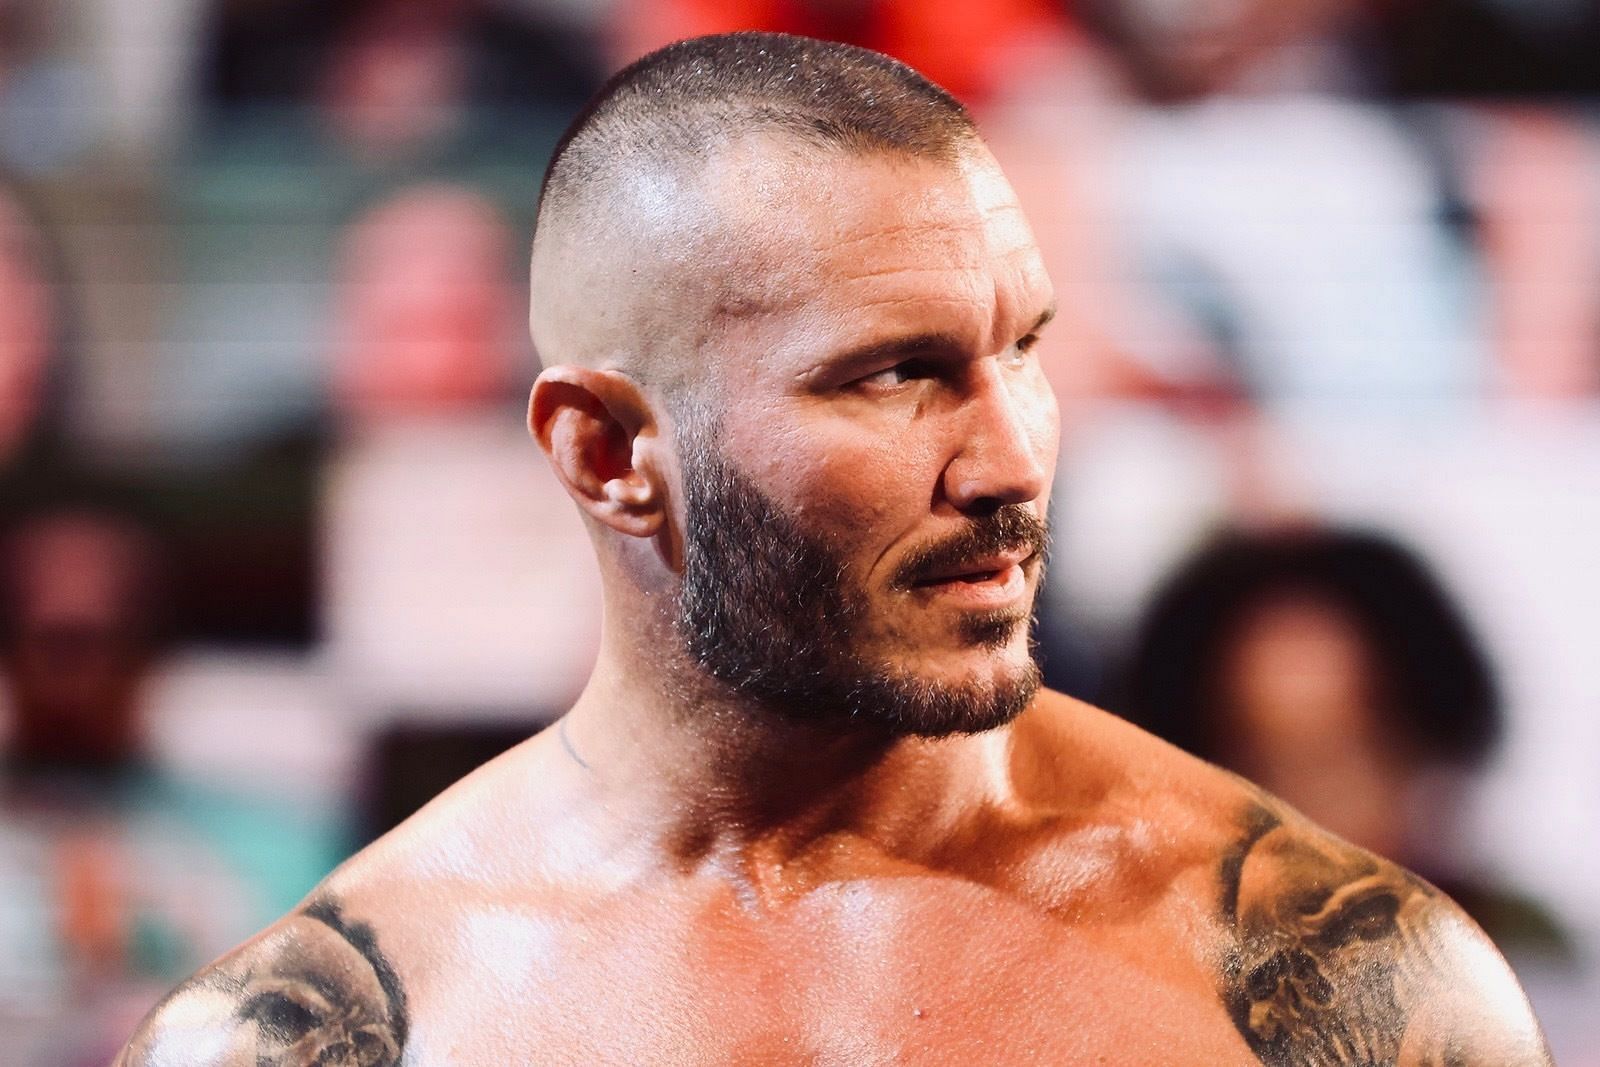 Randy Orton is a multi-time WWE World Champion